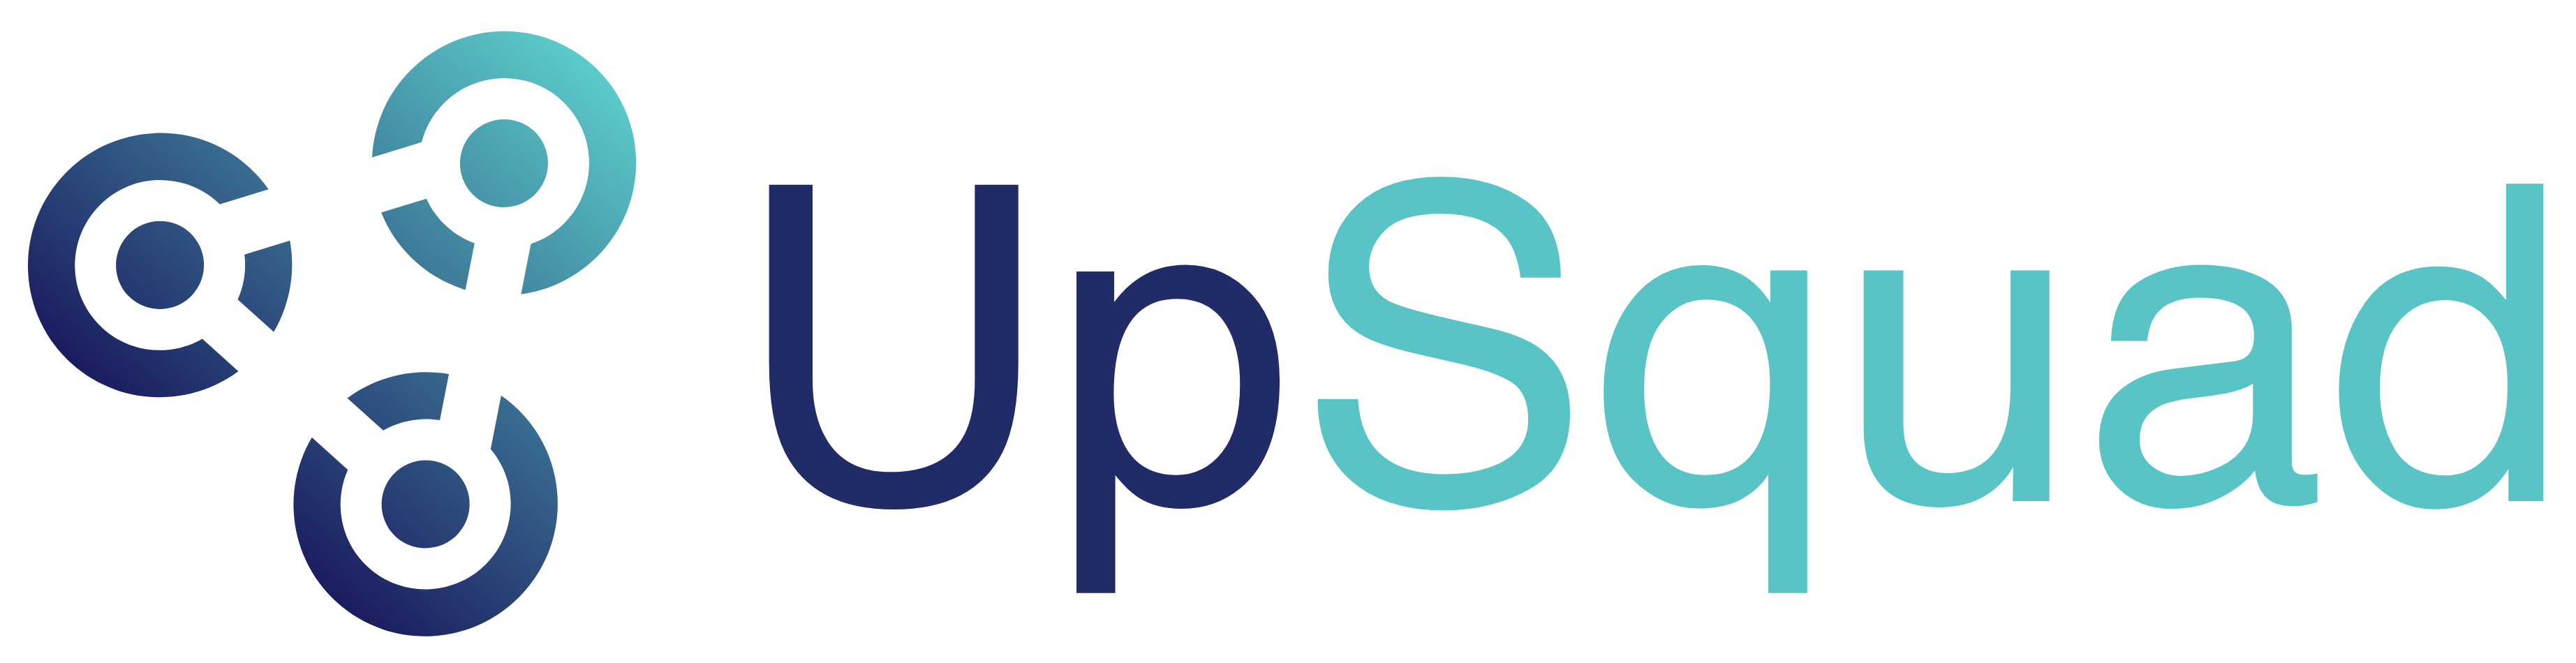 Upsquad Logo